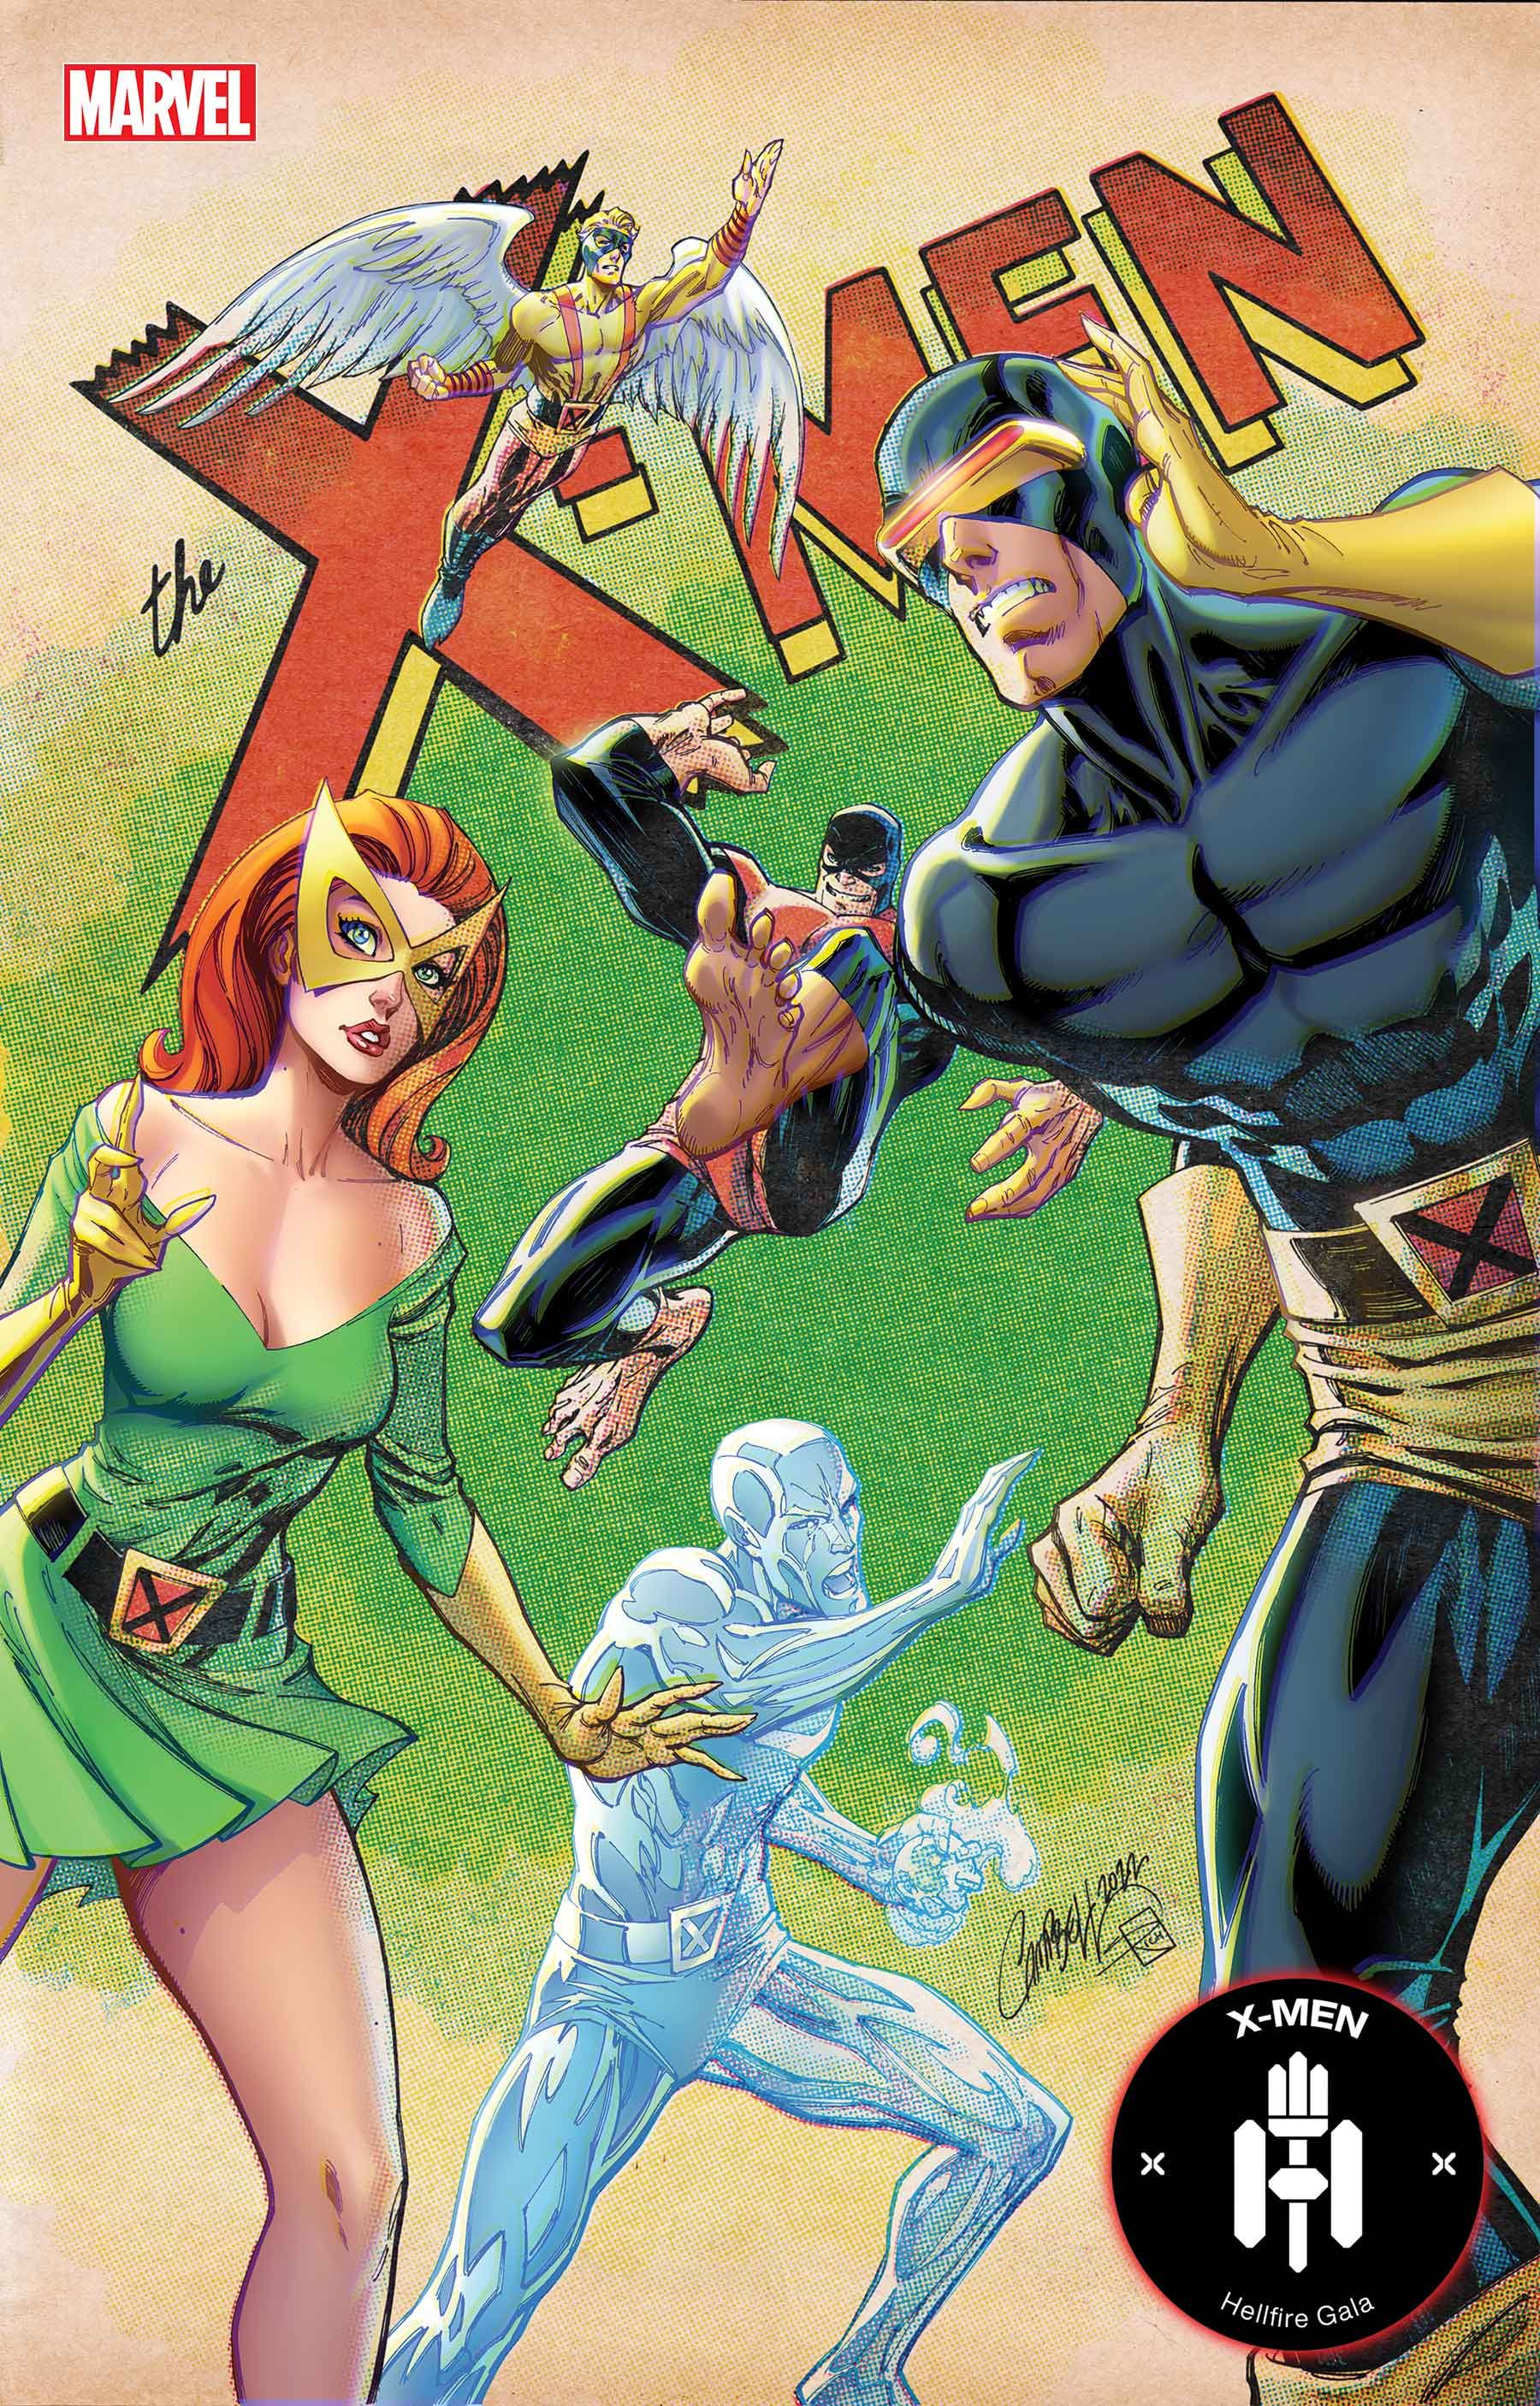 J. Scot Campbell celebrates the X-Men's 60th anniversary